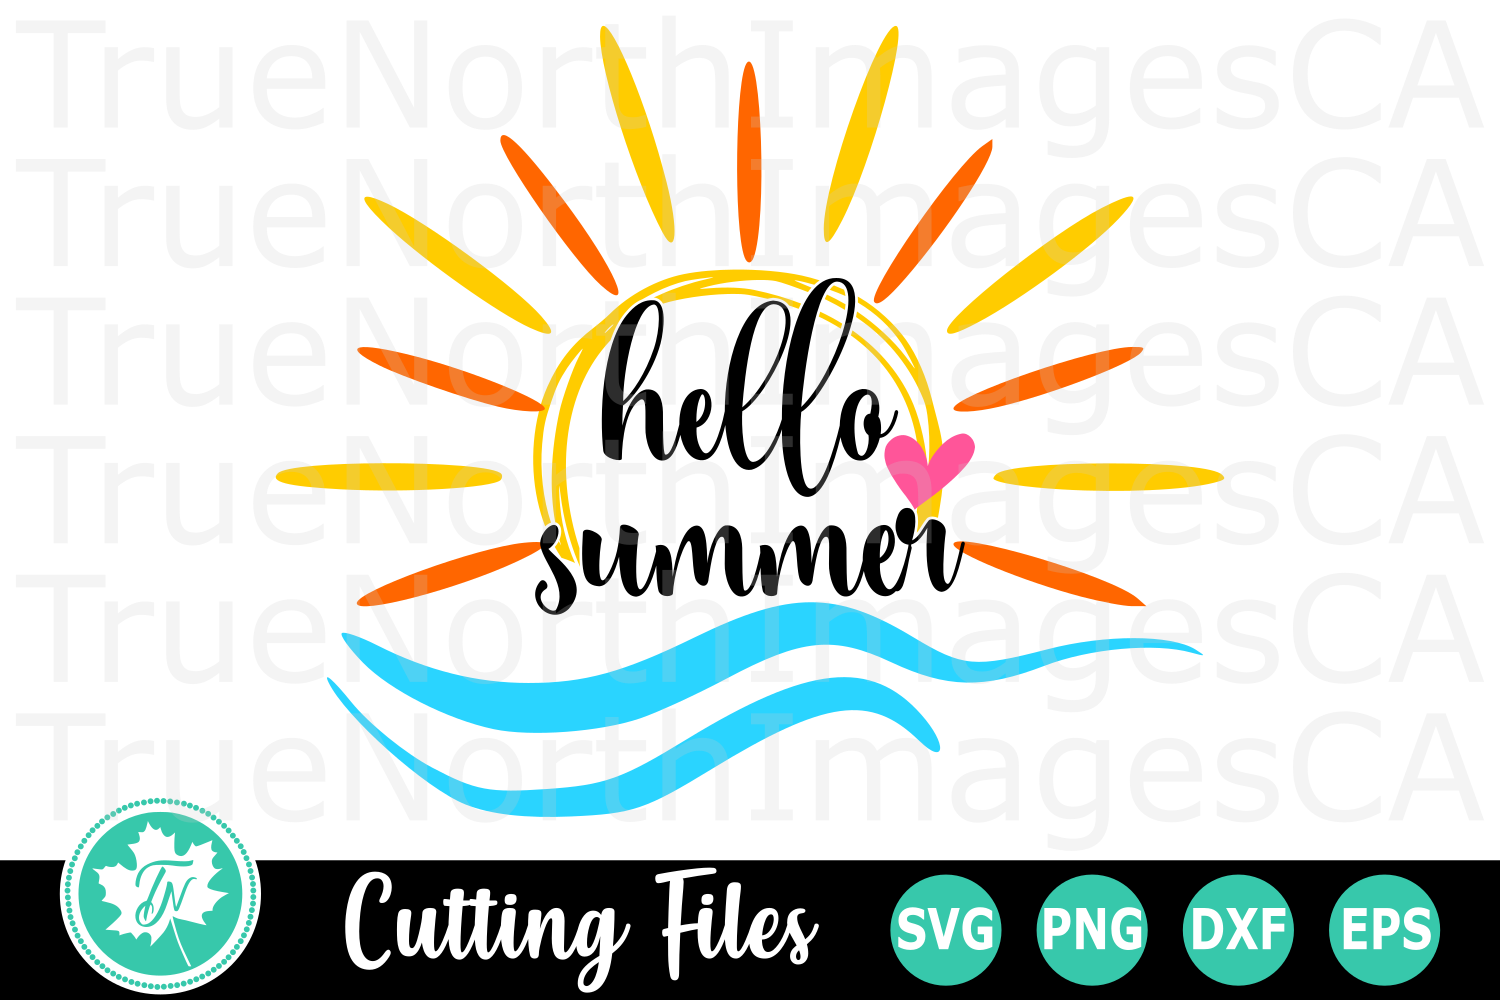 Download Hello Summer - A Summer SVG Cut File